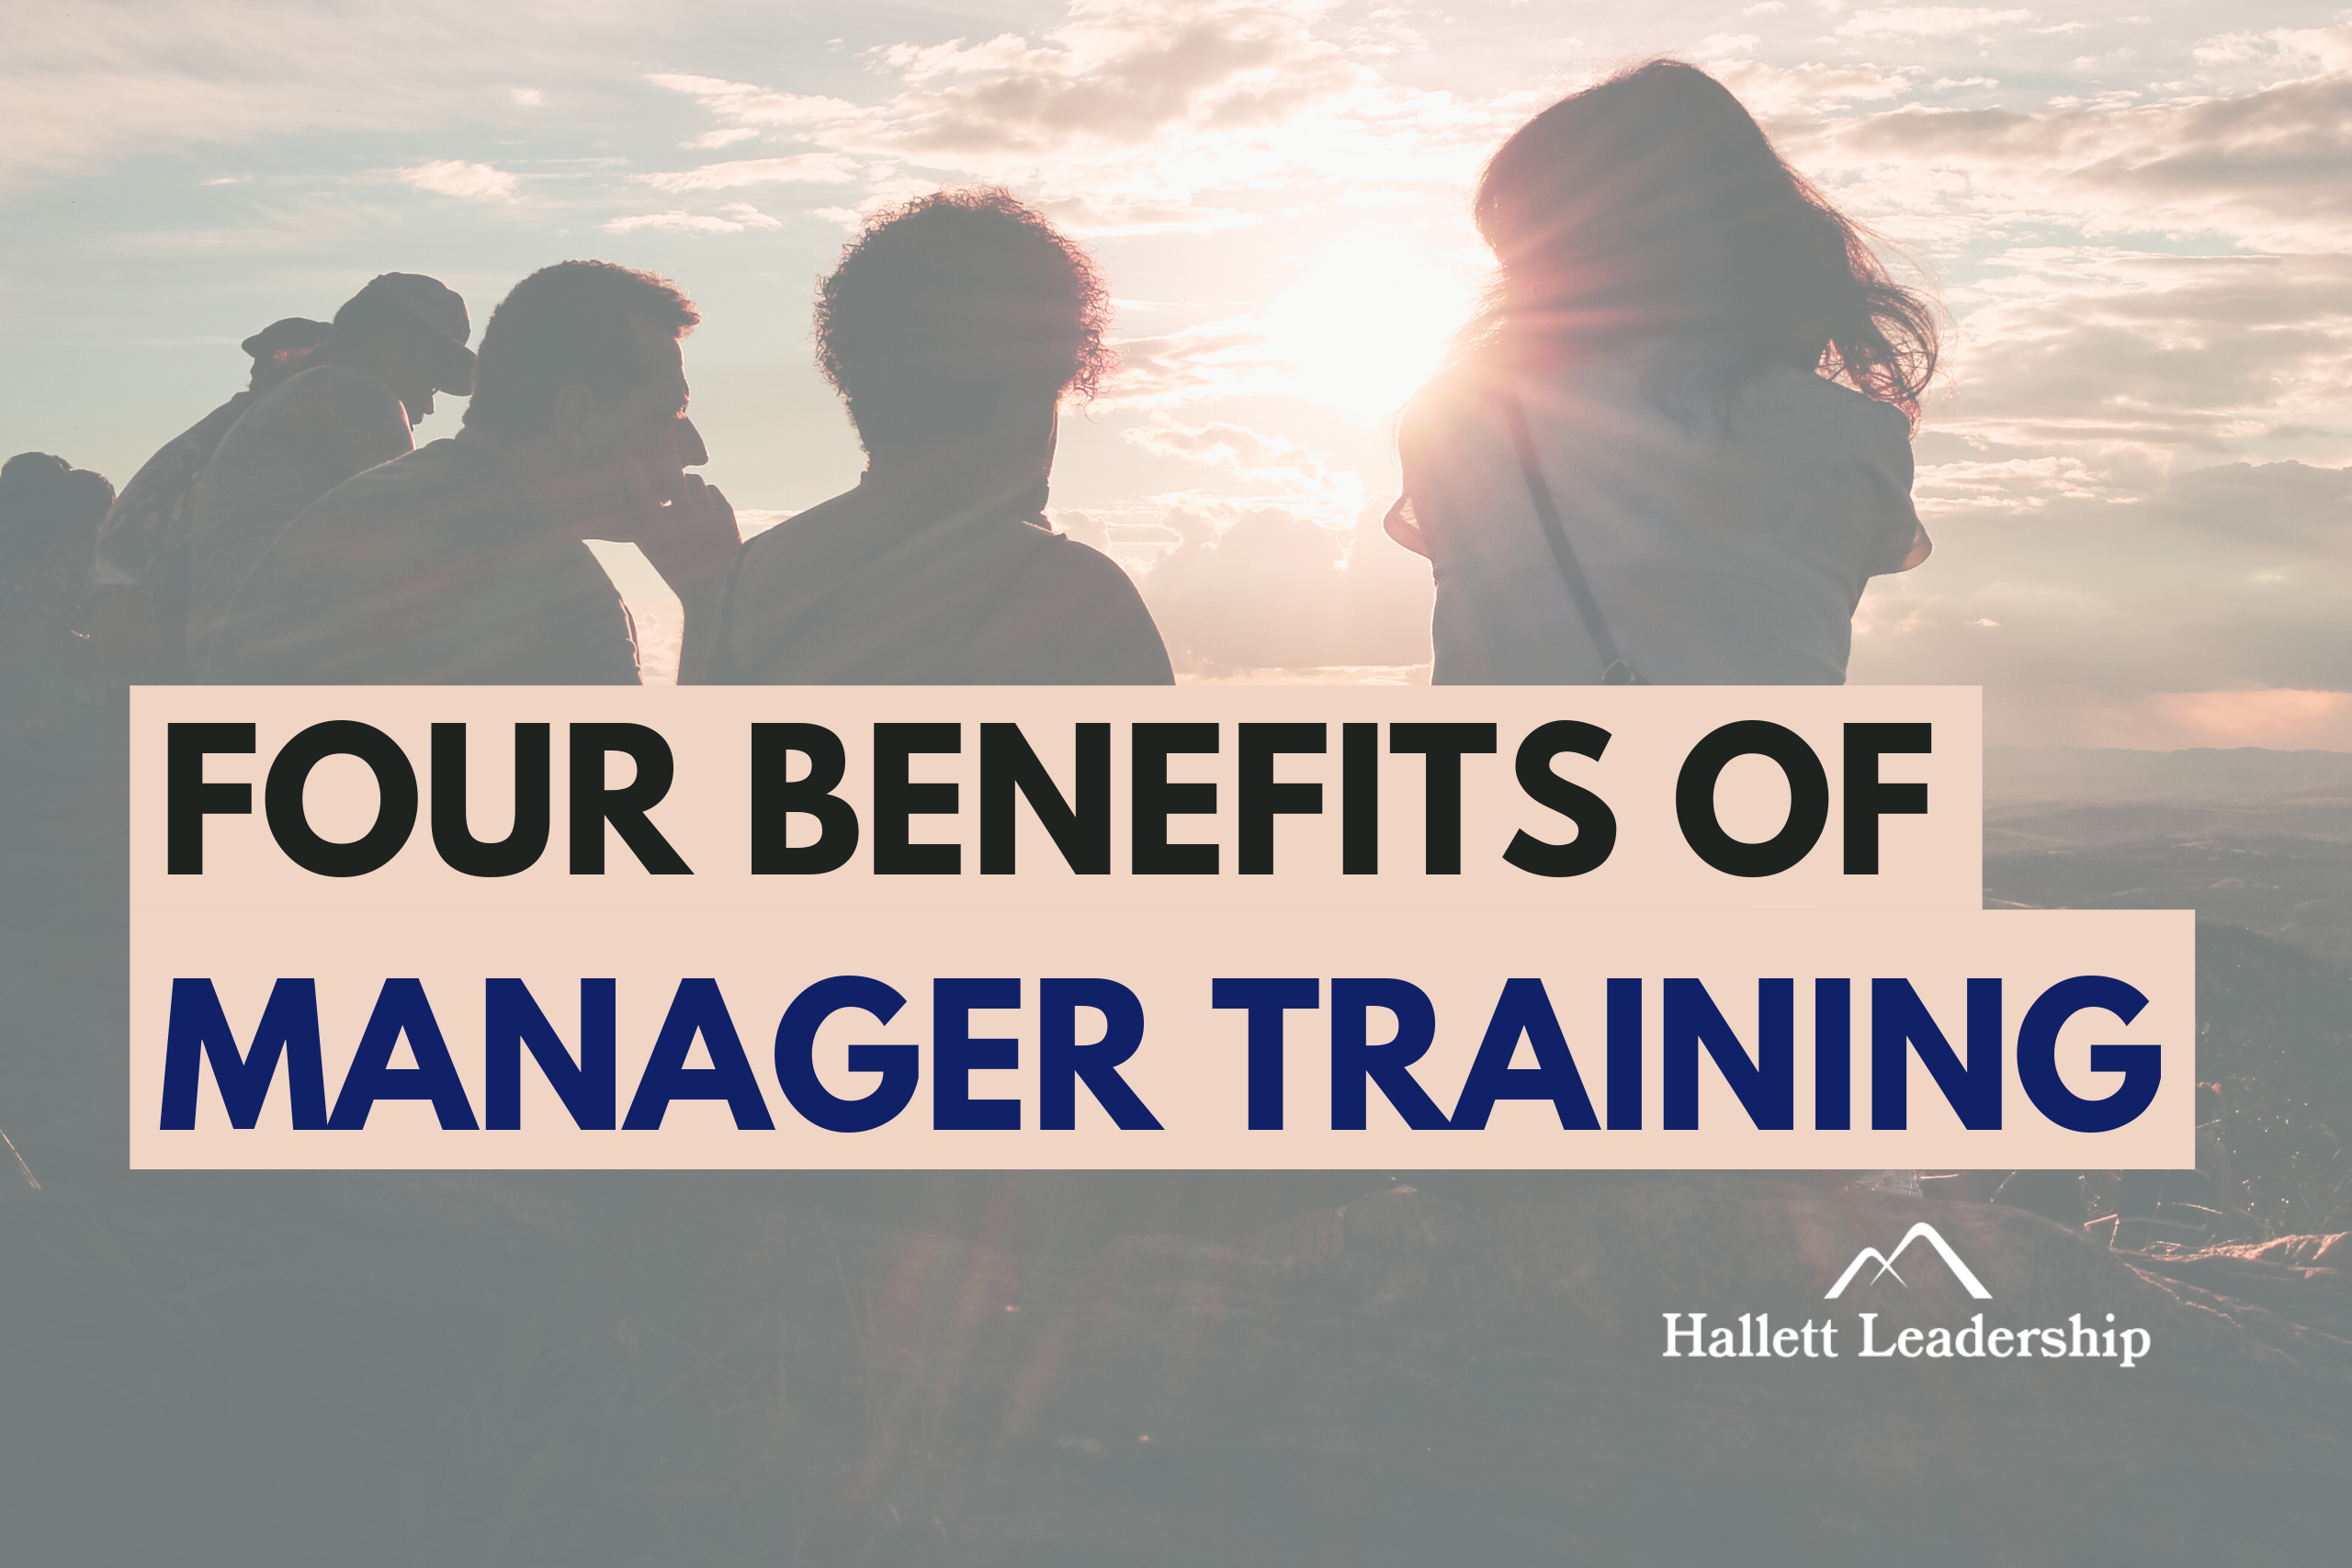 Middle Management Training Benefits